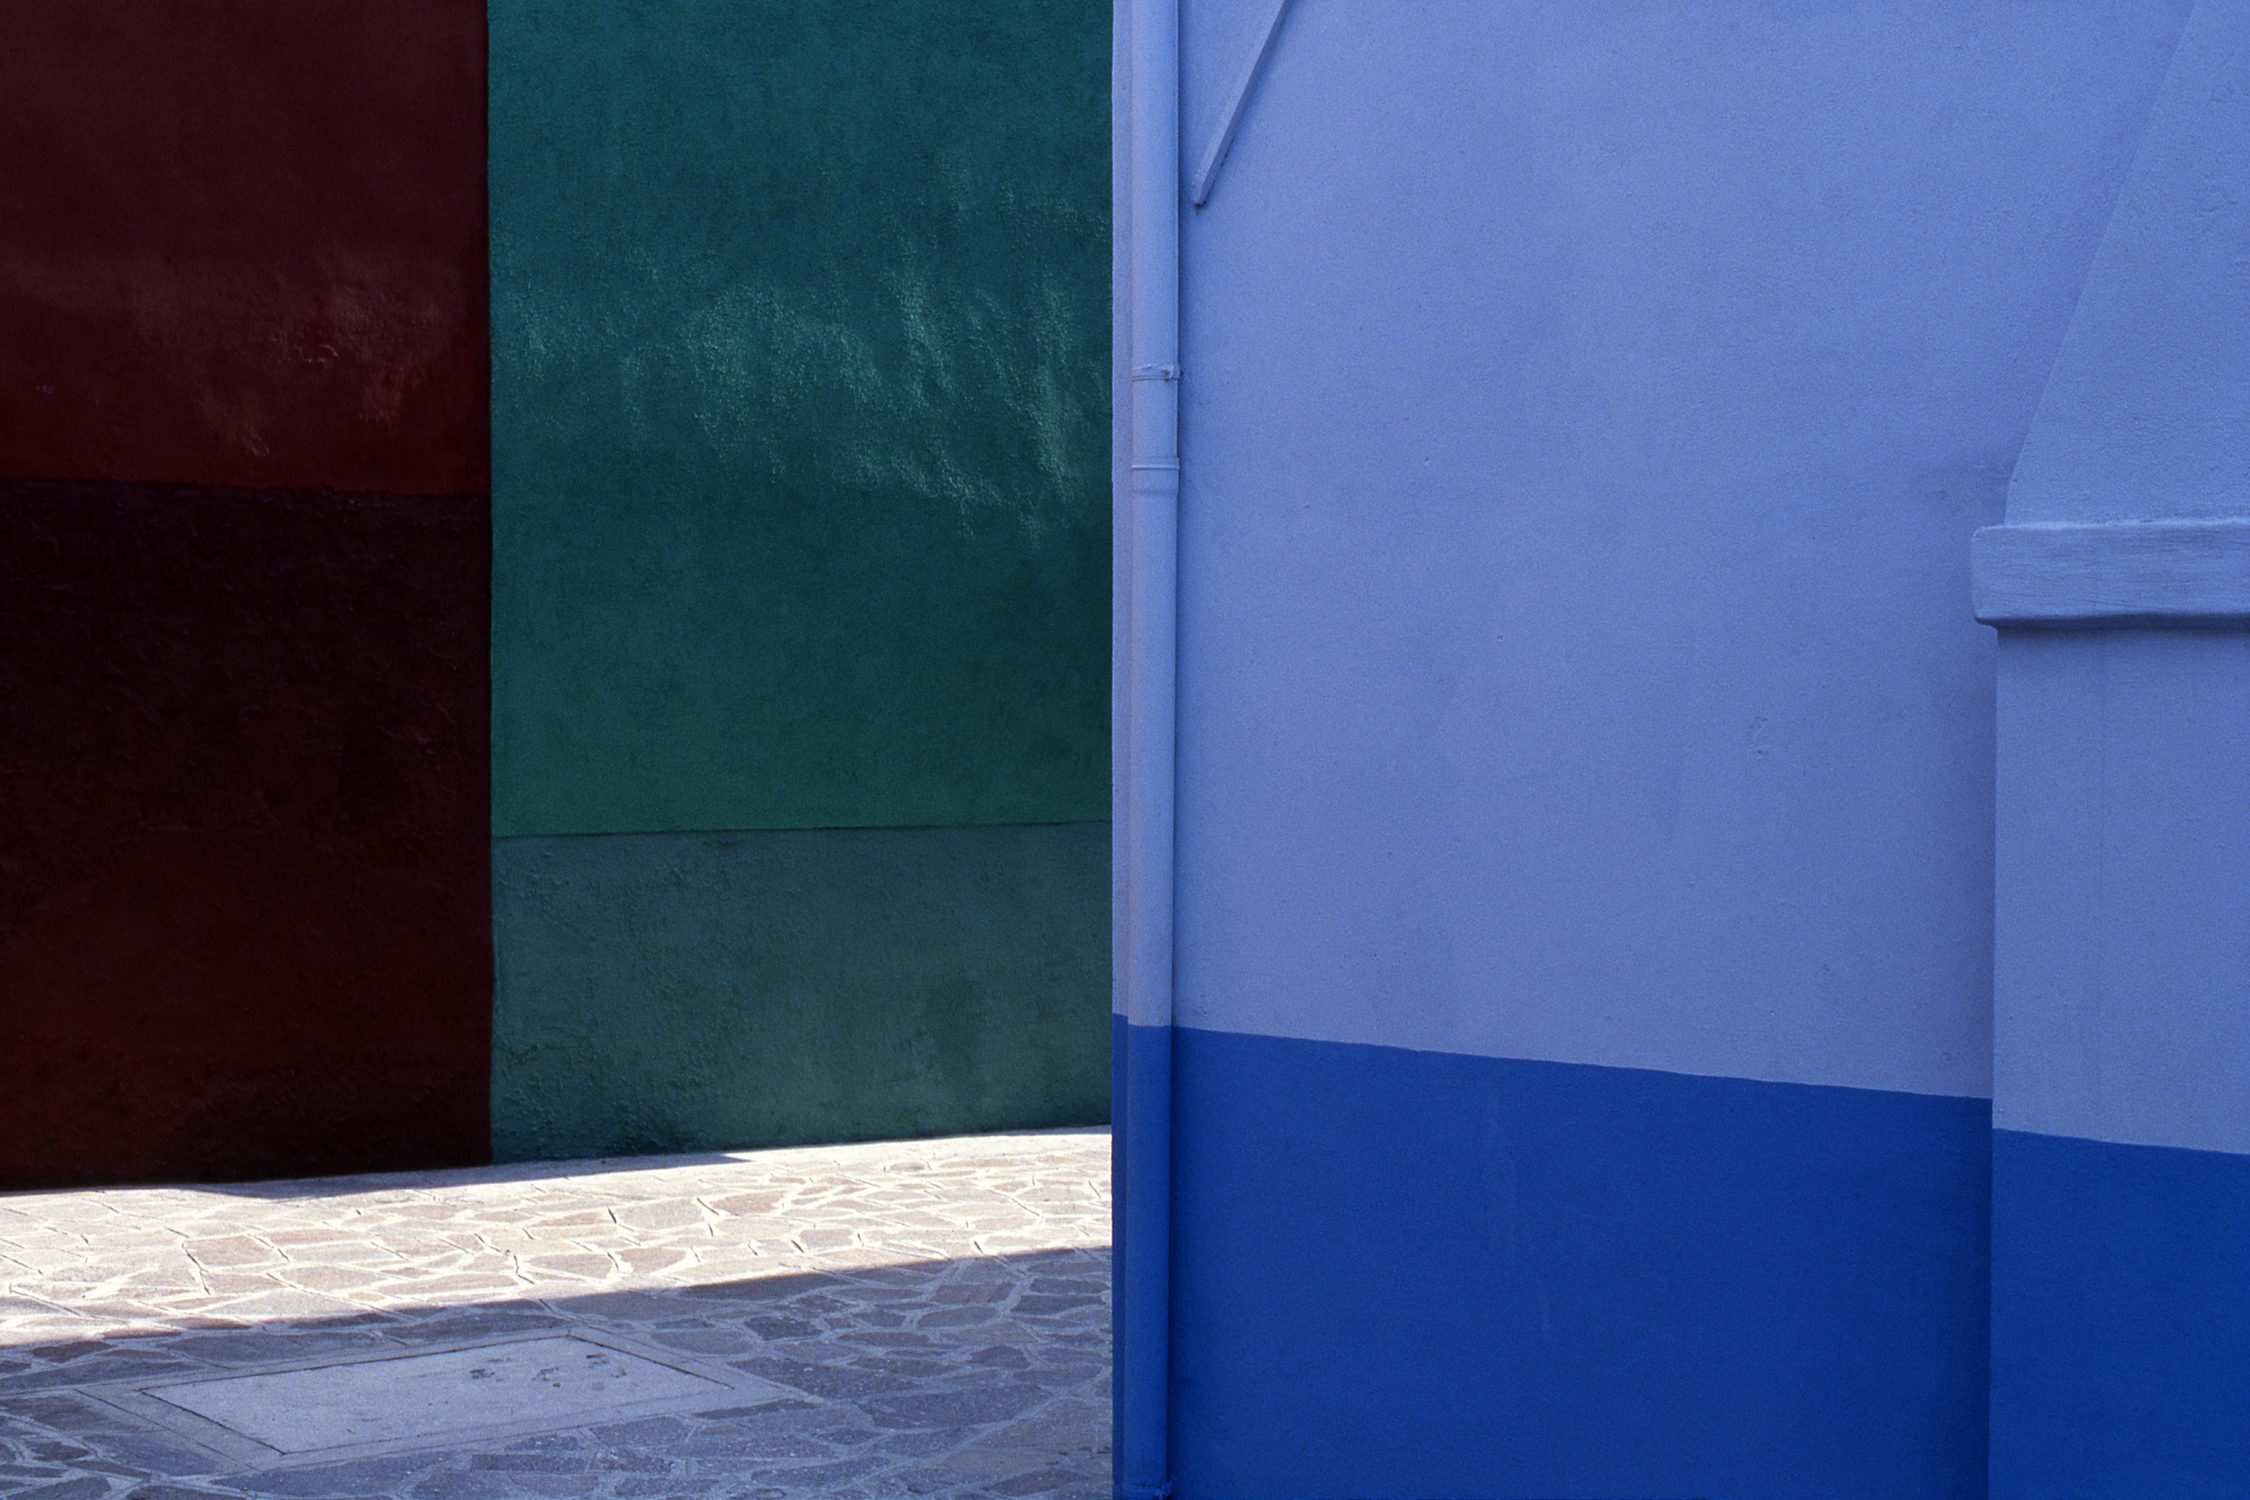   Street, Burano Italy, 1978 ,&nbsp;Cibachrome Print, 16 x 24cm, Edition of 10.&nbsp;&nbsp; &nbsp; &nbsp; &nbsp; &nbsp; &nbsp; &nbsp; &nbsp; &nbsp; &nbsp; &nbsp; &nbsp; &nbsp;  Exhibition:  Burano Colour Works ,&nbsp;Australian Centre for Photography